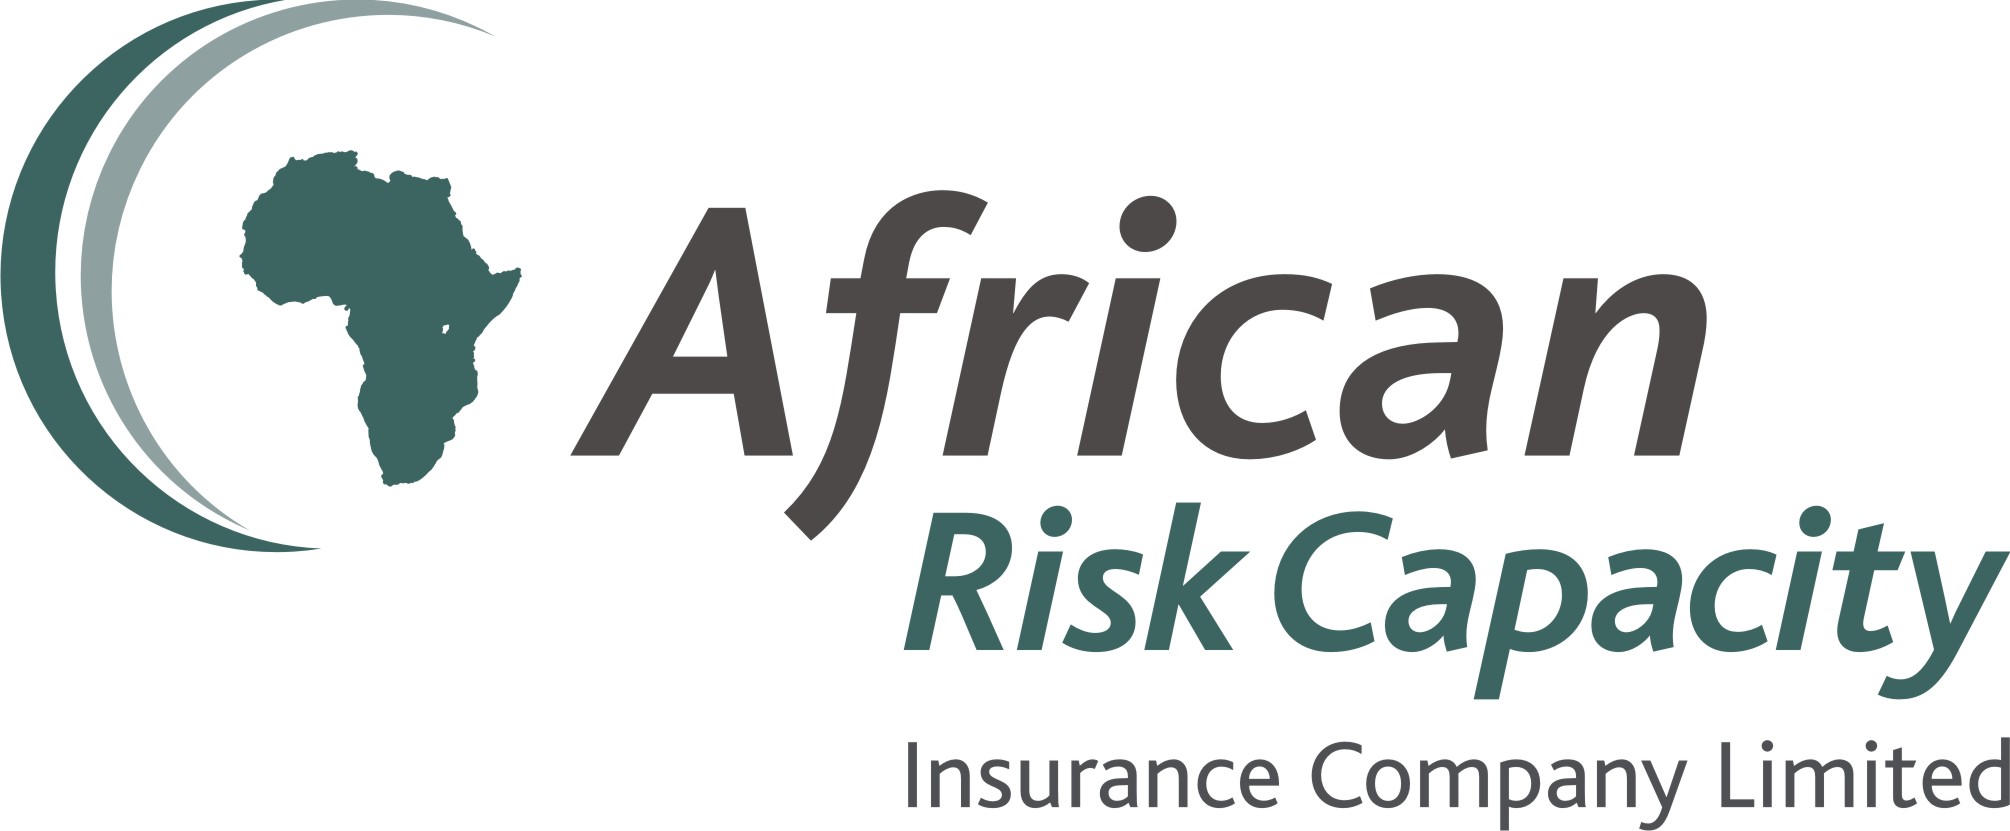 African Risk Capacity Insurance Company Limited : Dolika Banda prend les commandes